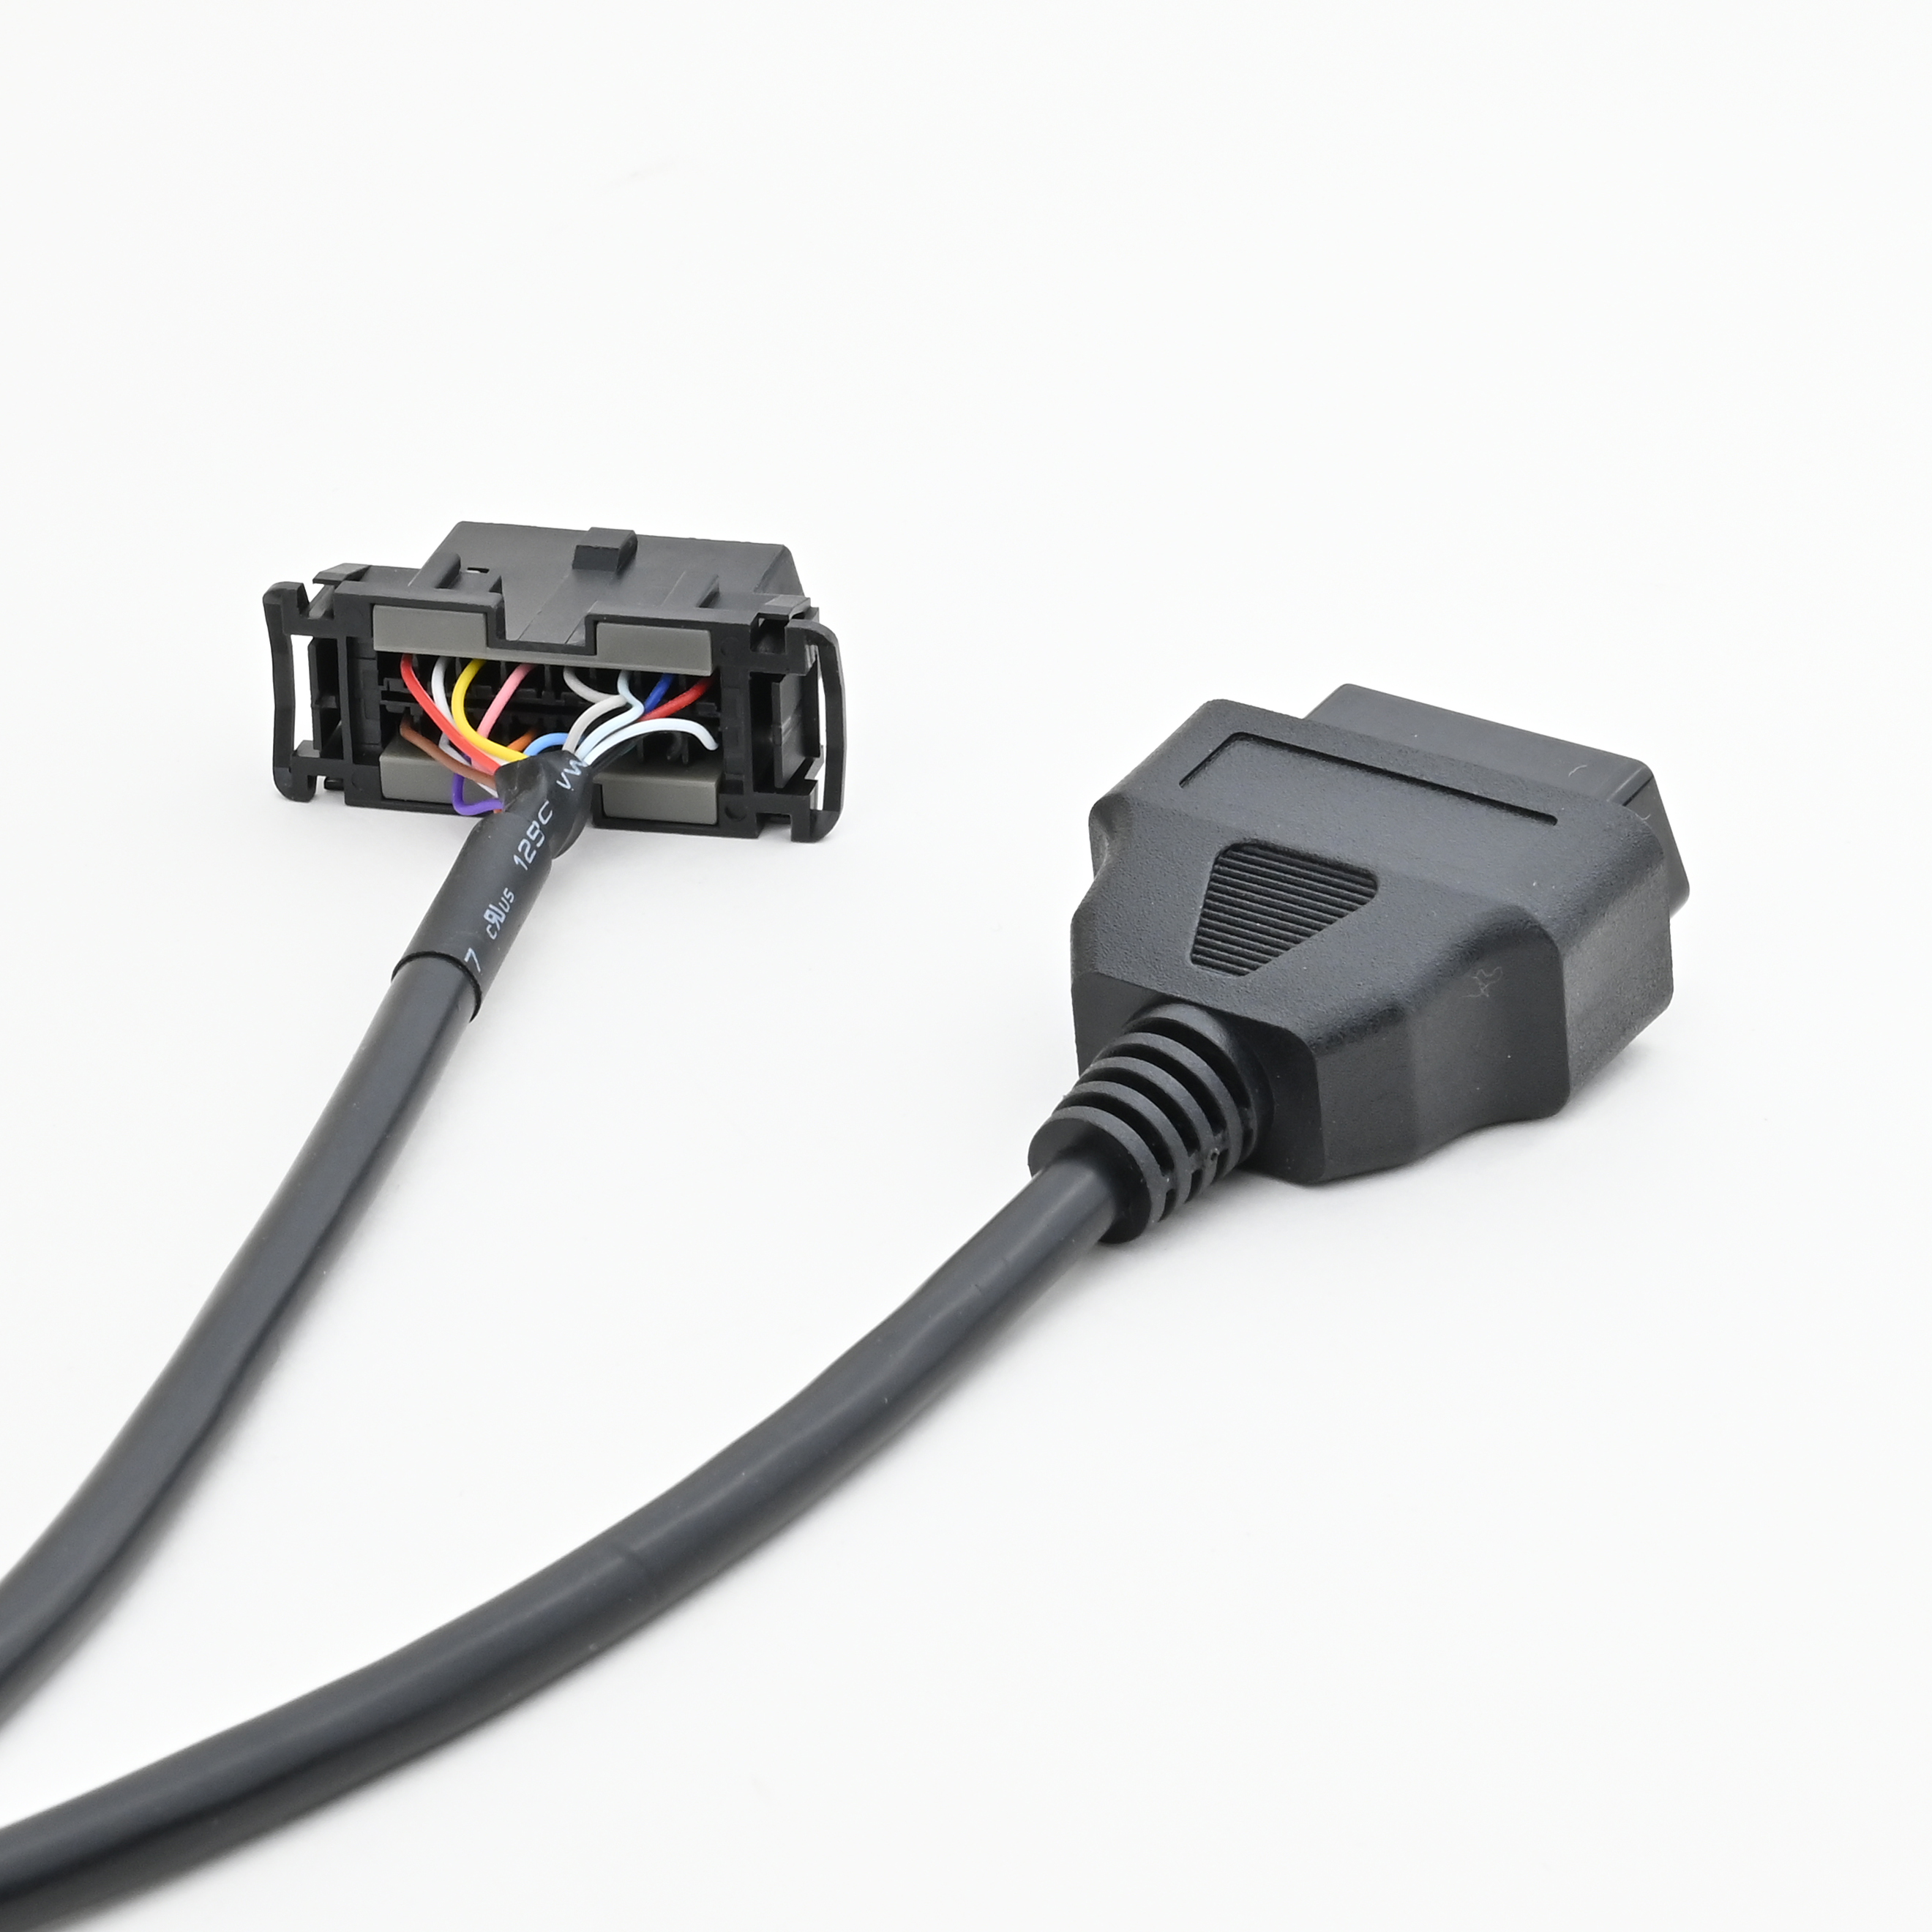 16pin OBDII Angle L Splitter Cable with Bracket for KIA Mazda